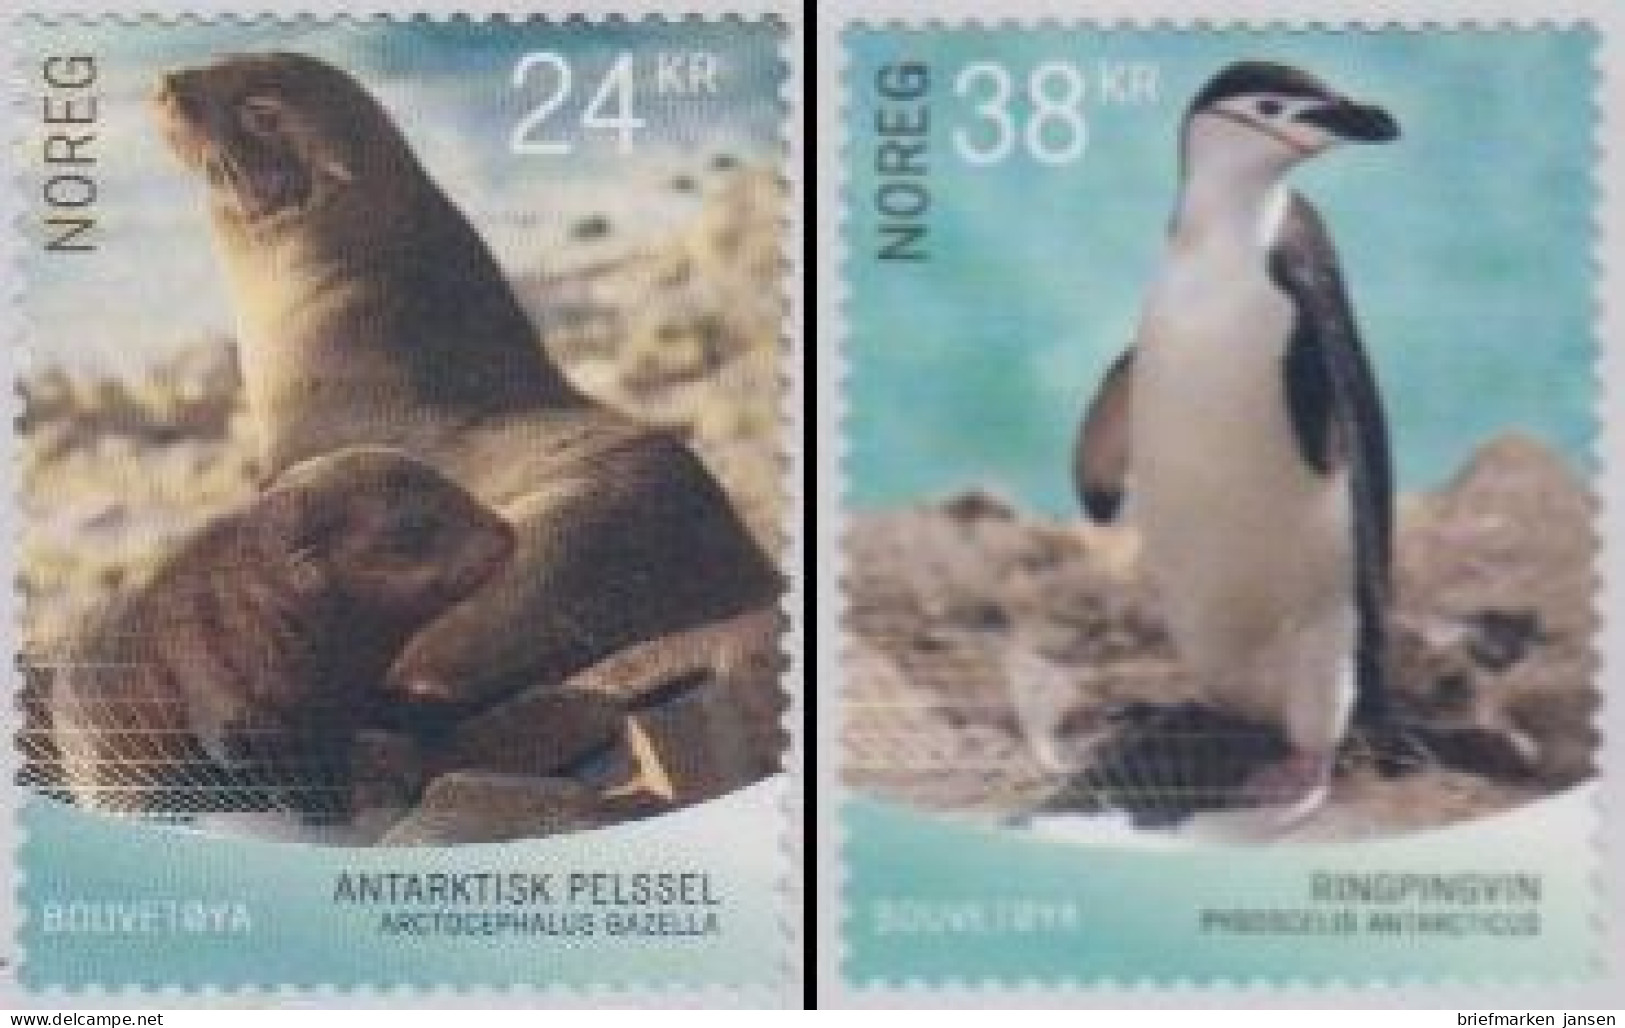 Norwegen MiNr. 1962-63 Fauna D.Bouvetinsel, Seebär, Pinguin, Skl (2 Werte) - Neufs